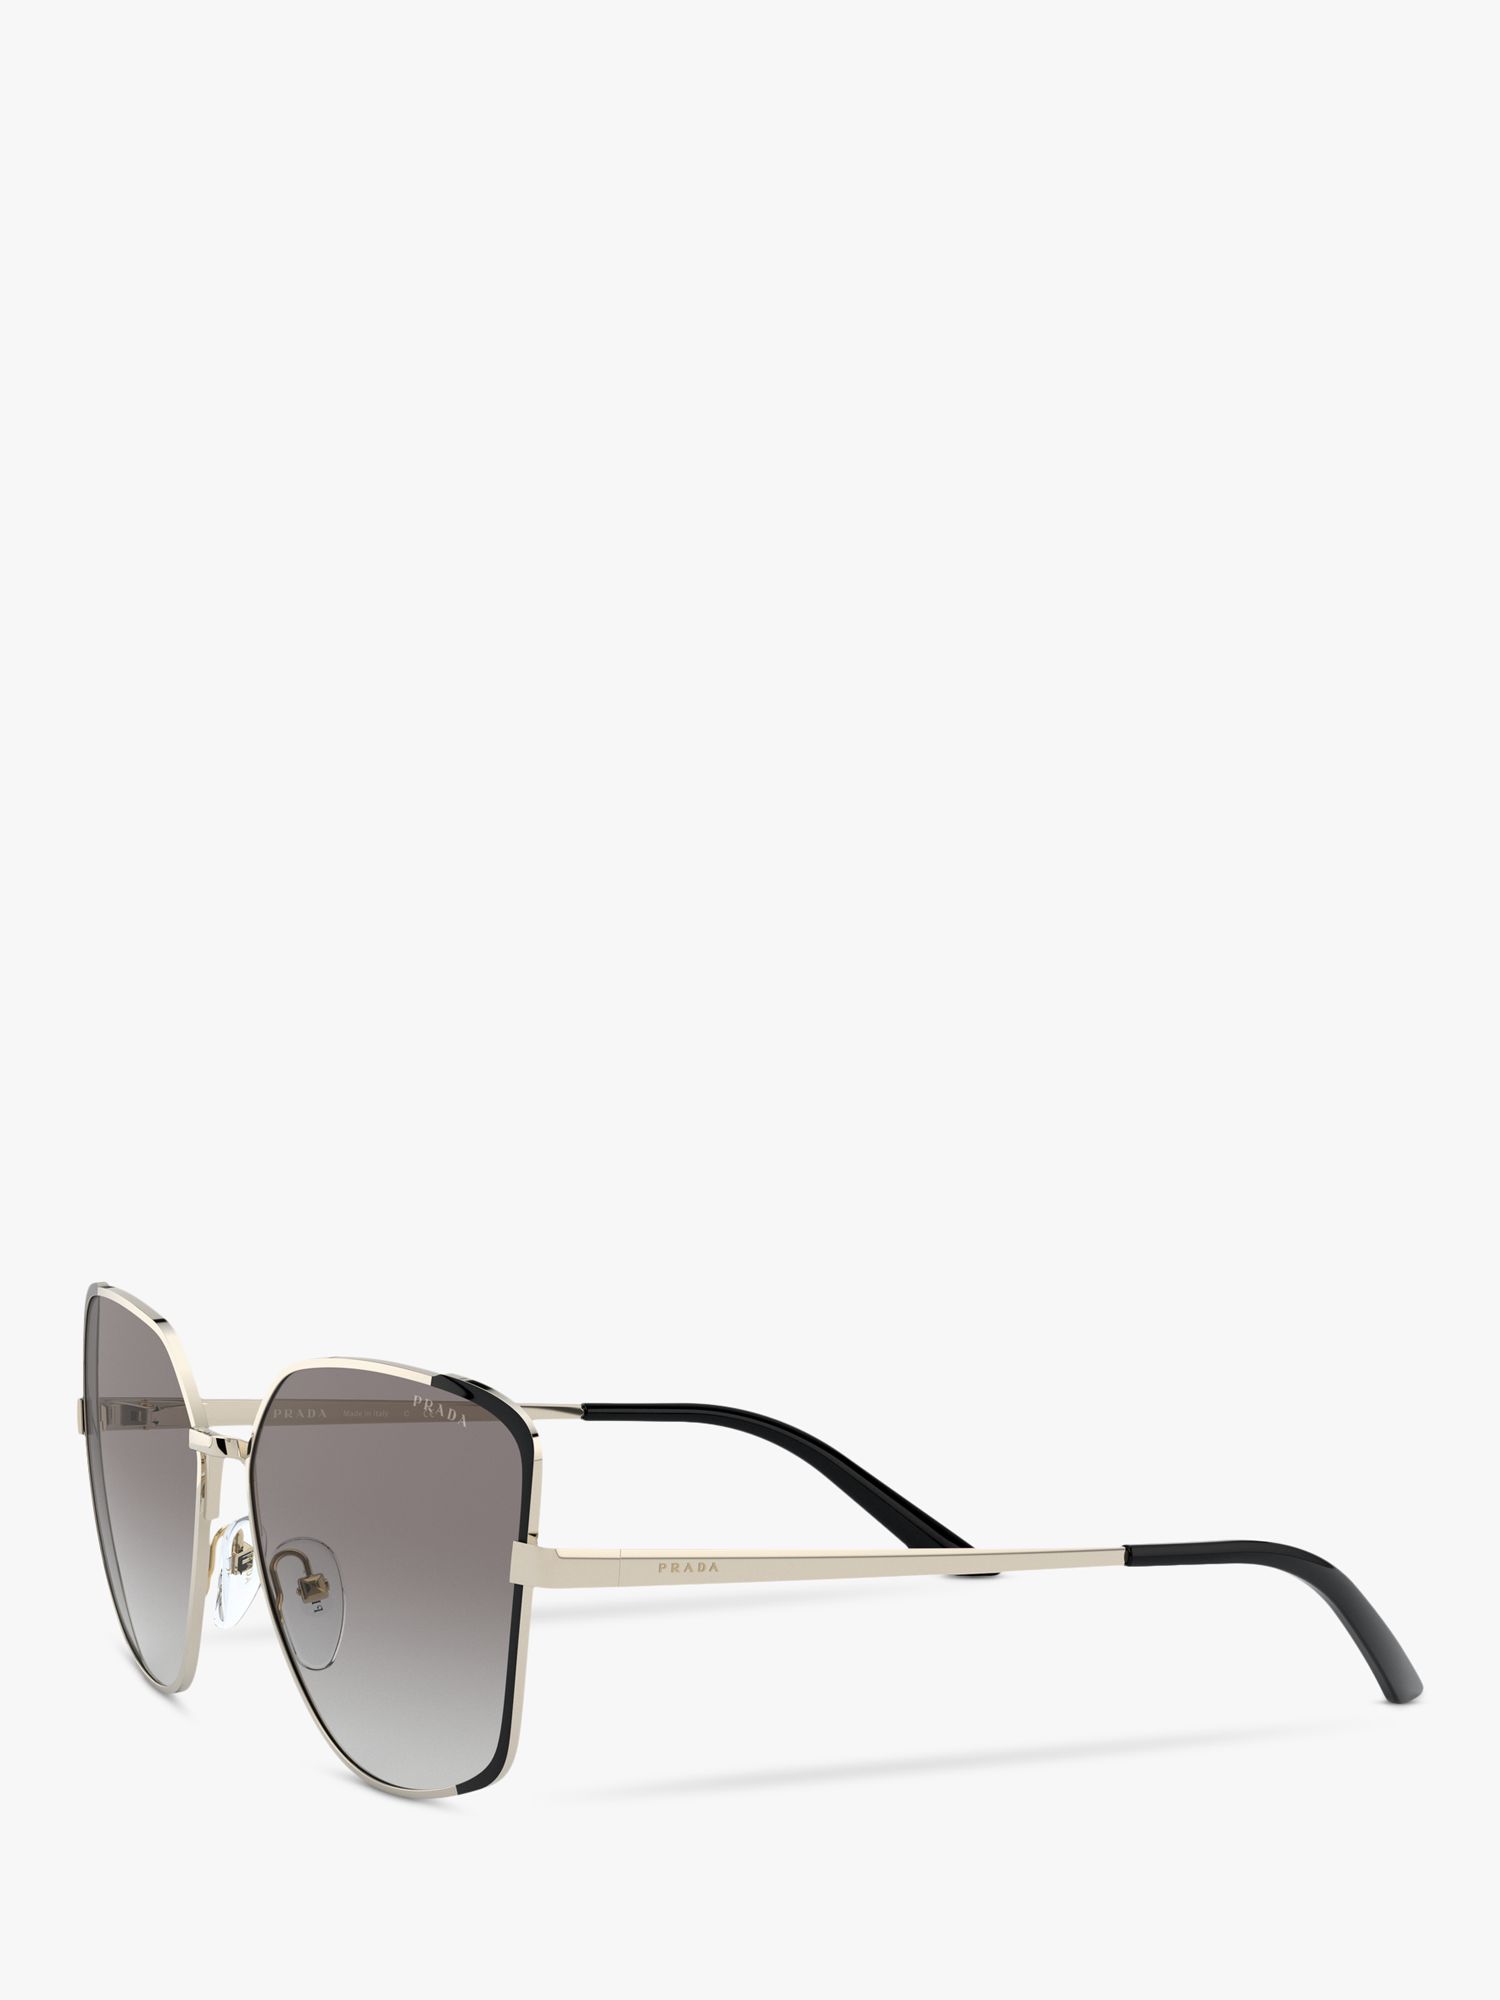 Prada PR 60XS Women's Irregular Sunglasses, Pale Gold/Grey Gradient at ...